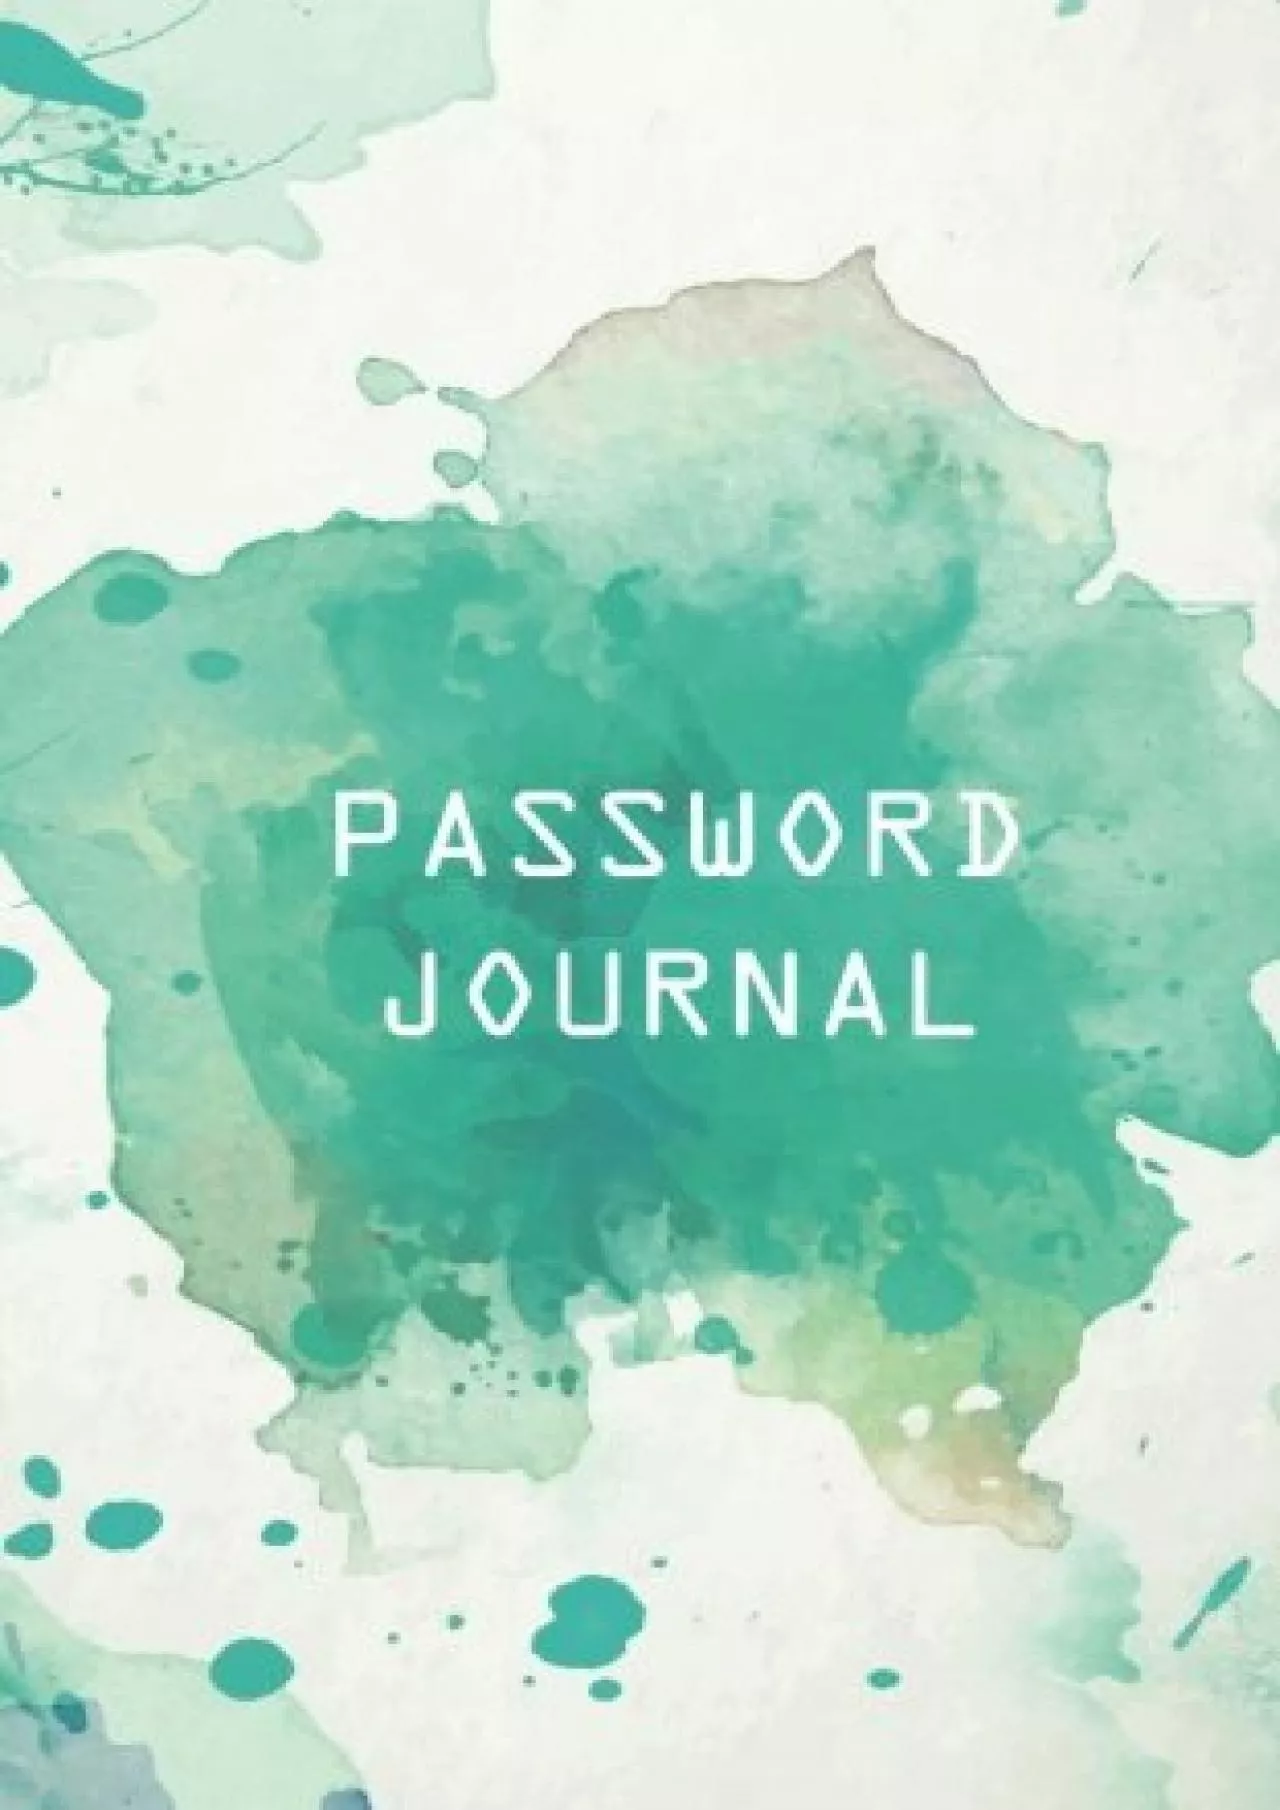 [FREE]-Password Journal: Web Password Logbook - (Green Watercolor) - A Password Journal